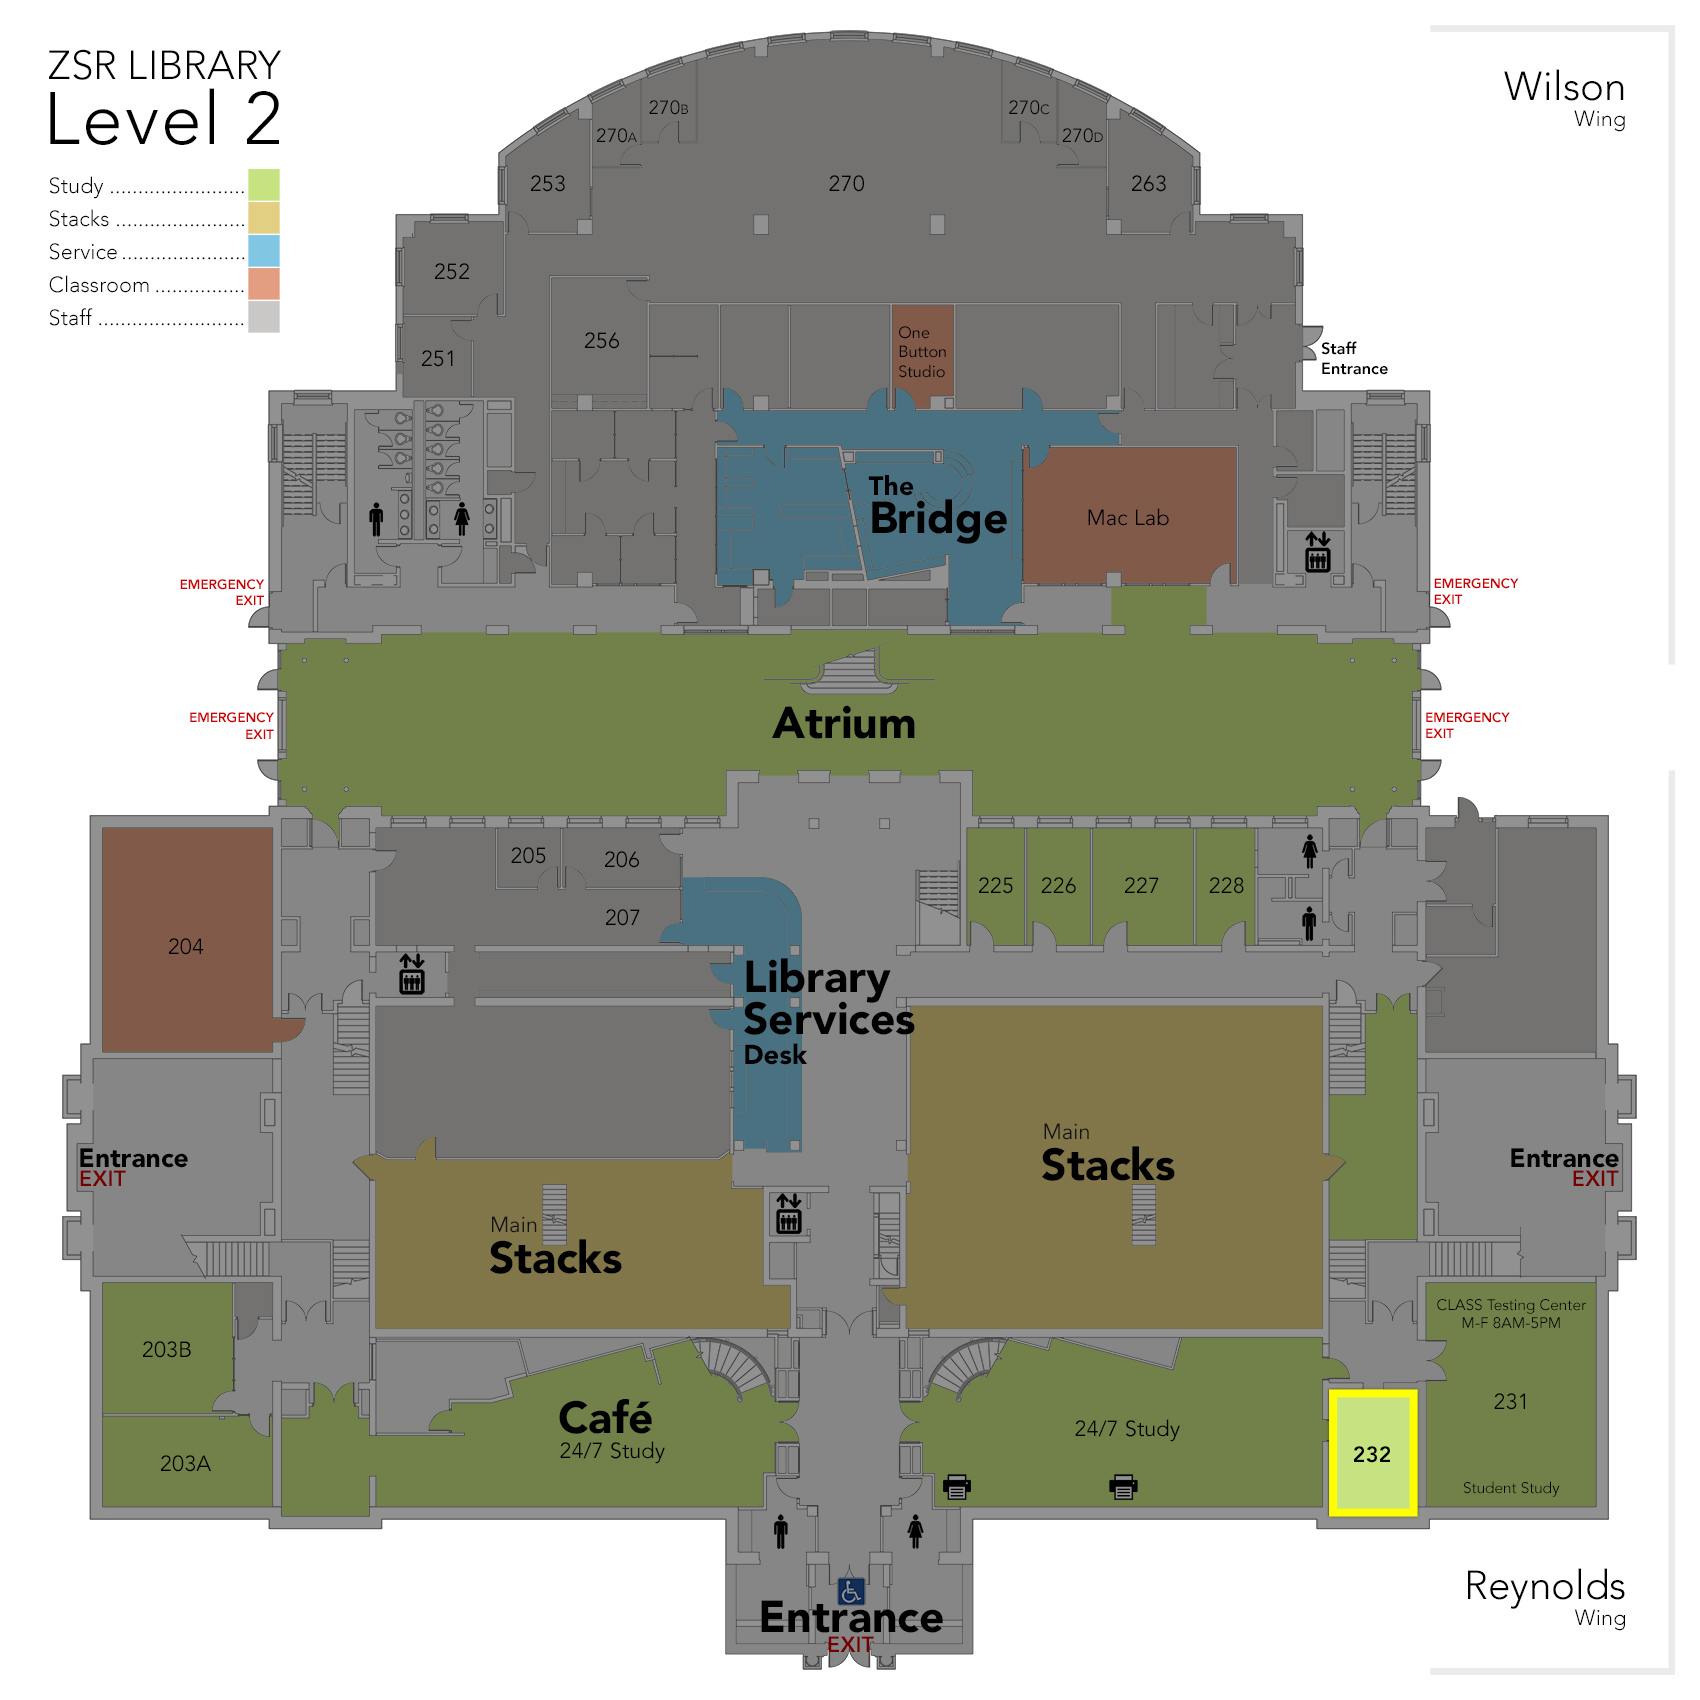 Level 2 Study Room 232 map